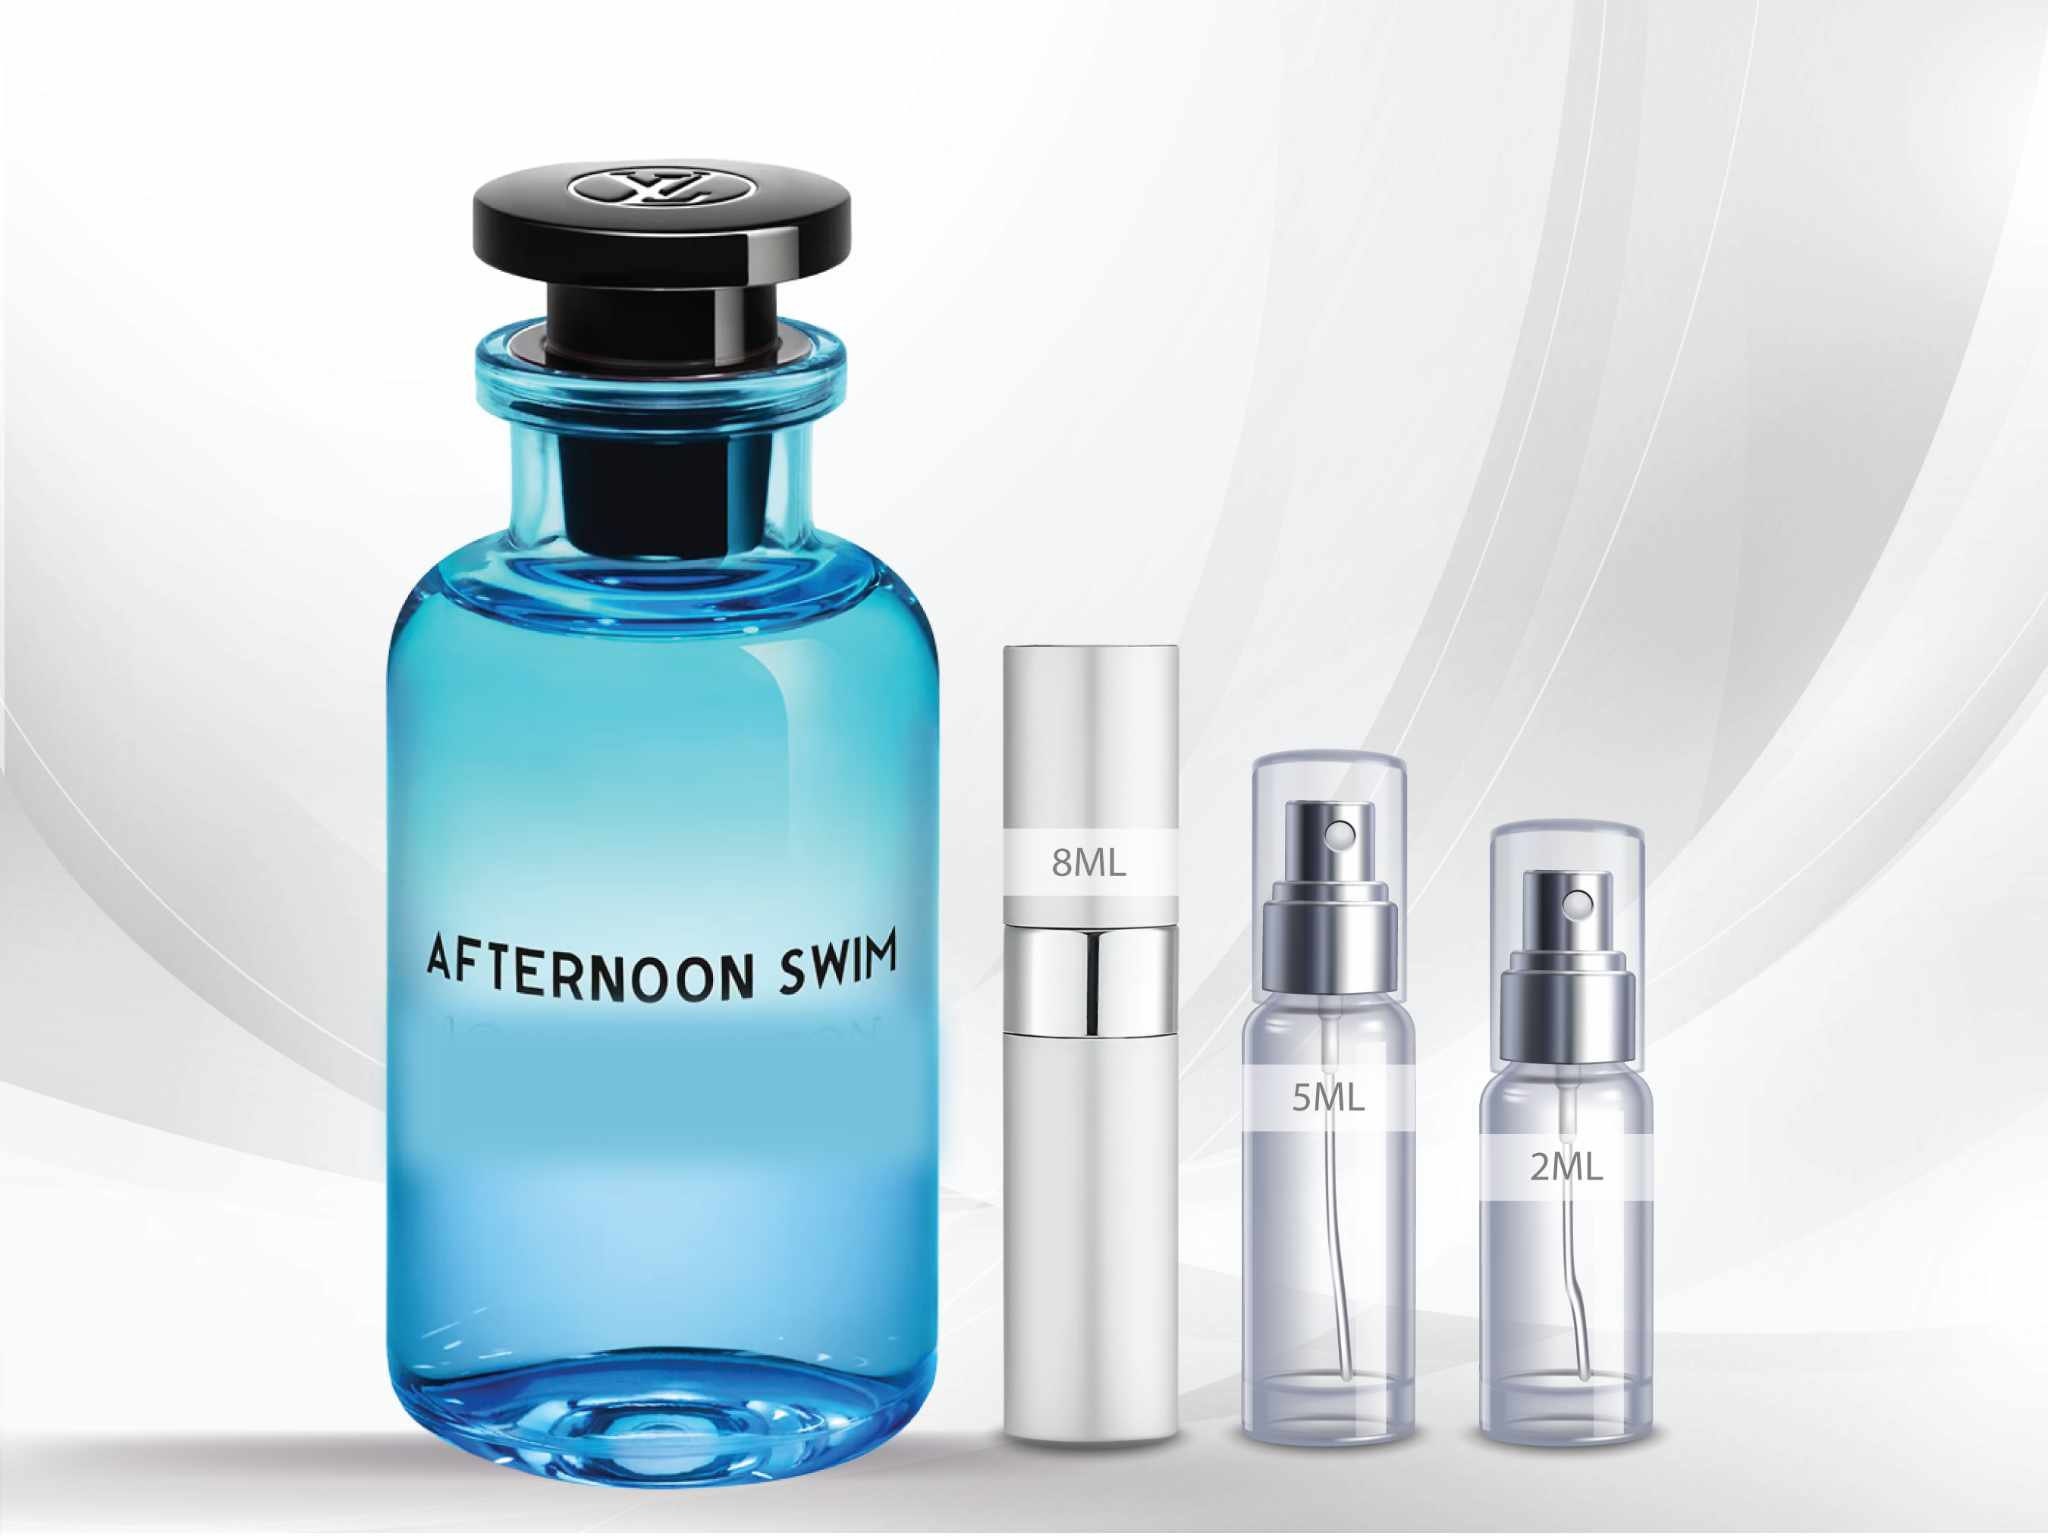 Afternoon Swim Perfume 2ML 5ML 8ML Travel Size Sample Bottles 